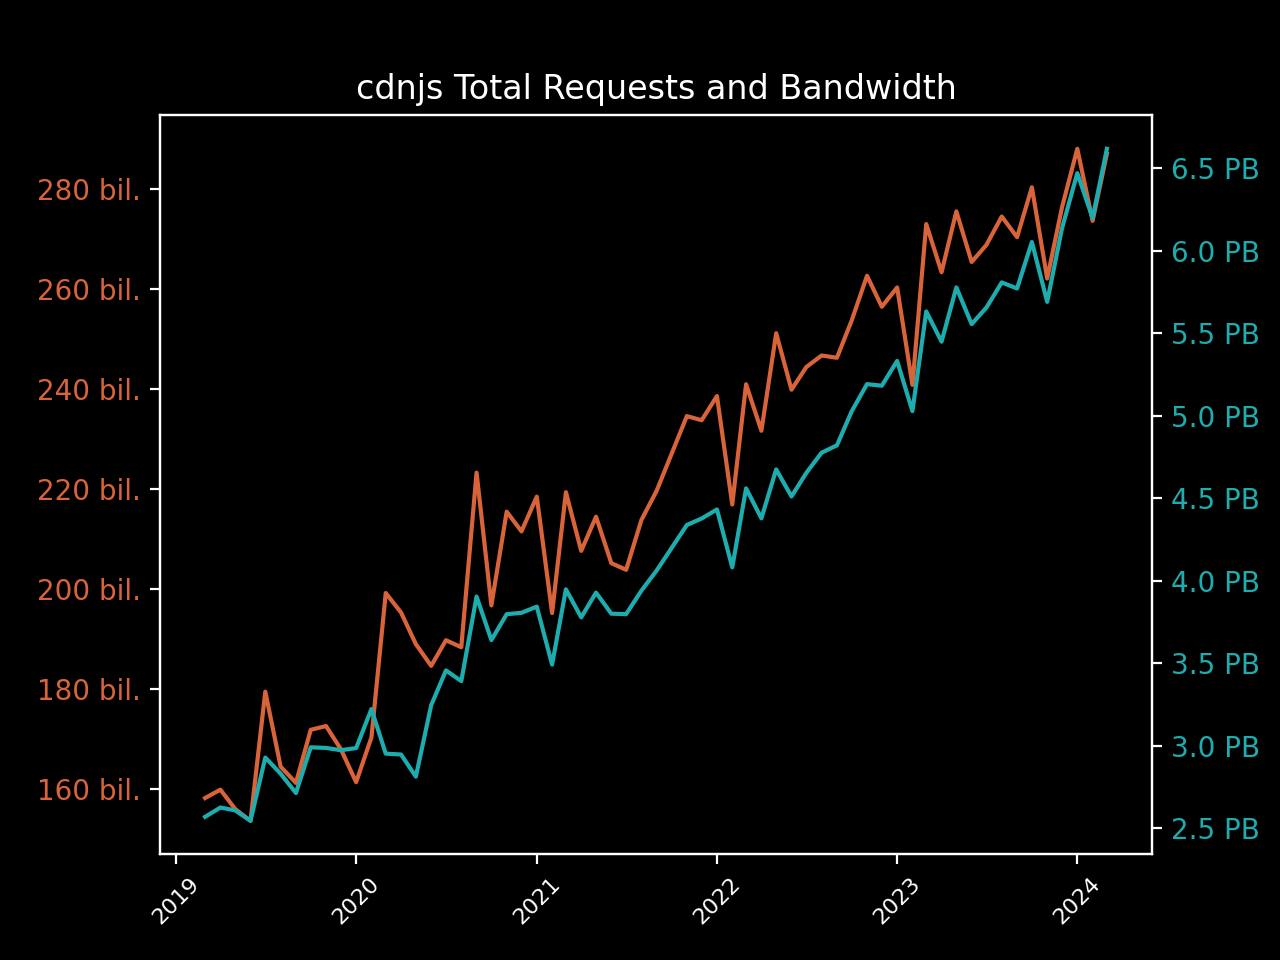 cdnjs total requests & bandwidth graph